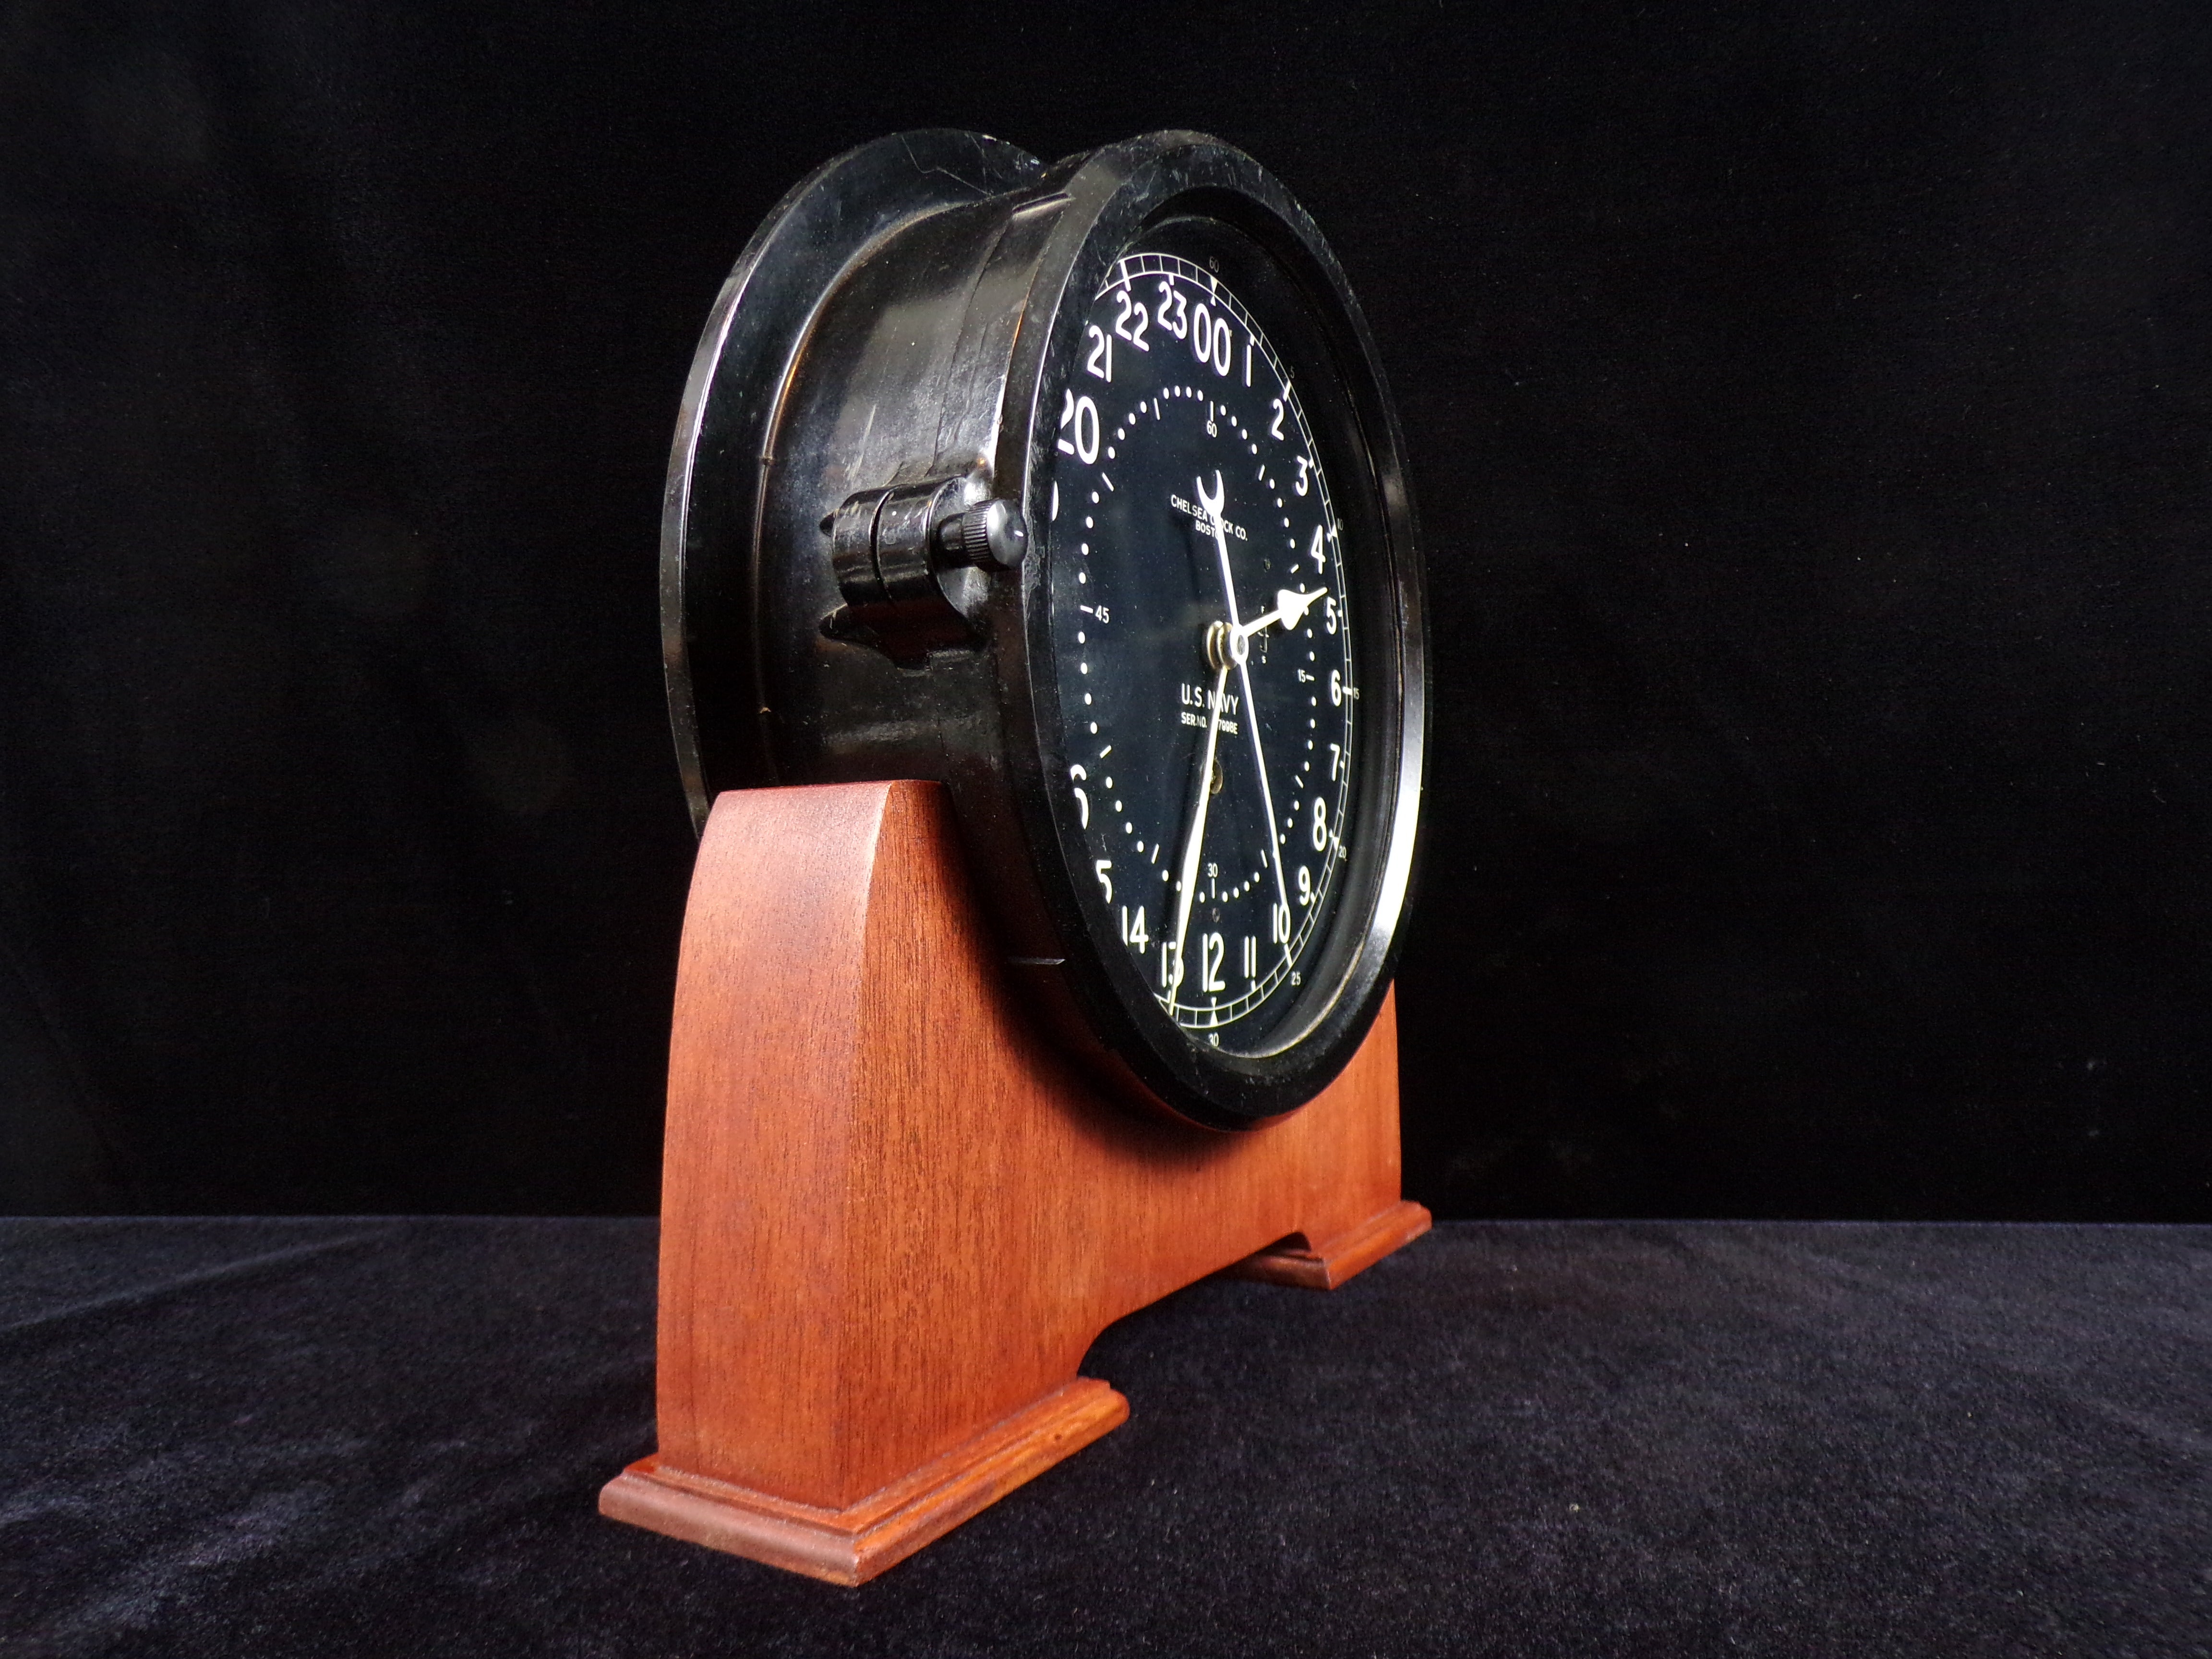 Chelsea Clock 24 Hour- U.S. Navy – Annapolis Maritime Antiques